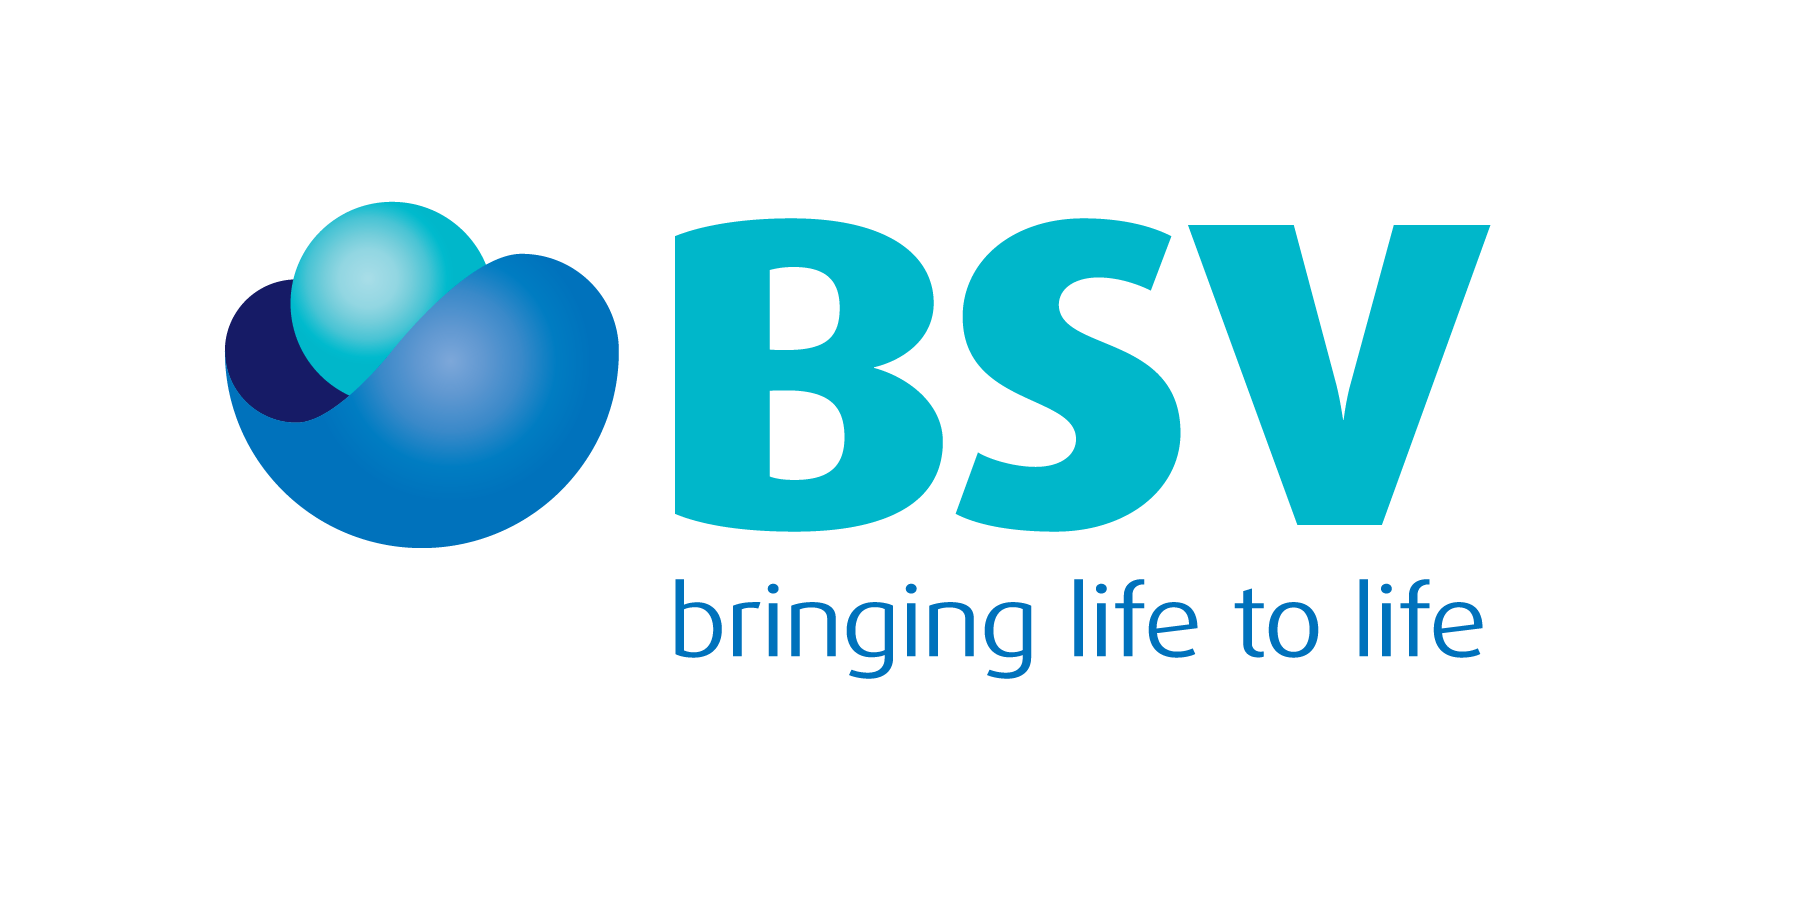 BSV Bioscience GmbH